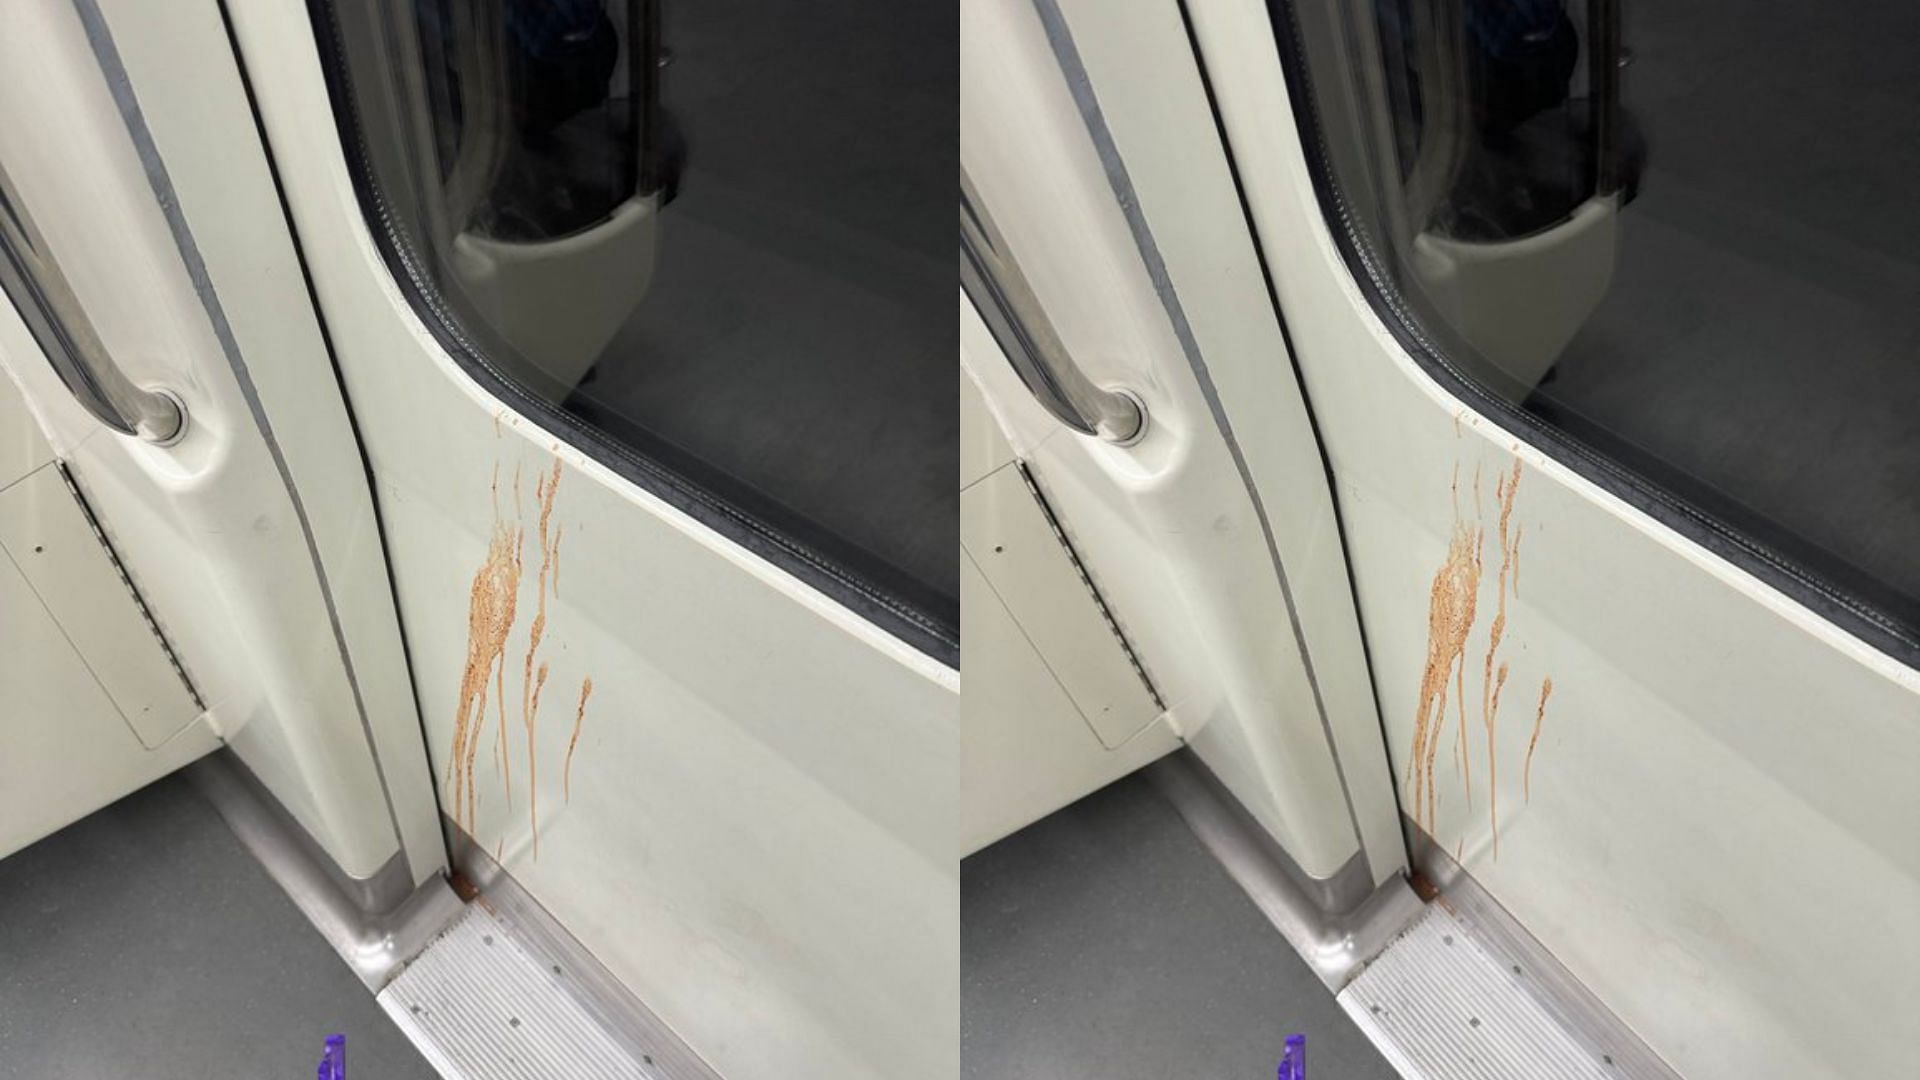 Metro mein thuka gutka pic of gutka stains inside metro goes viral on internet